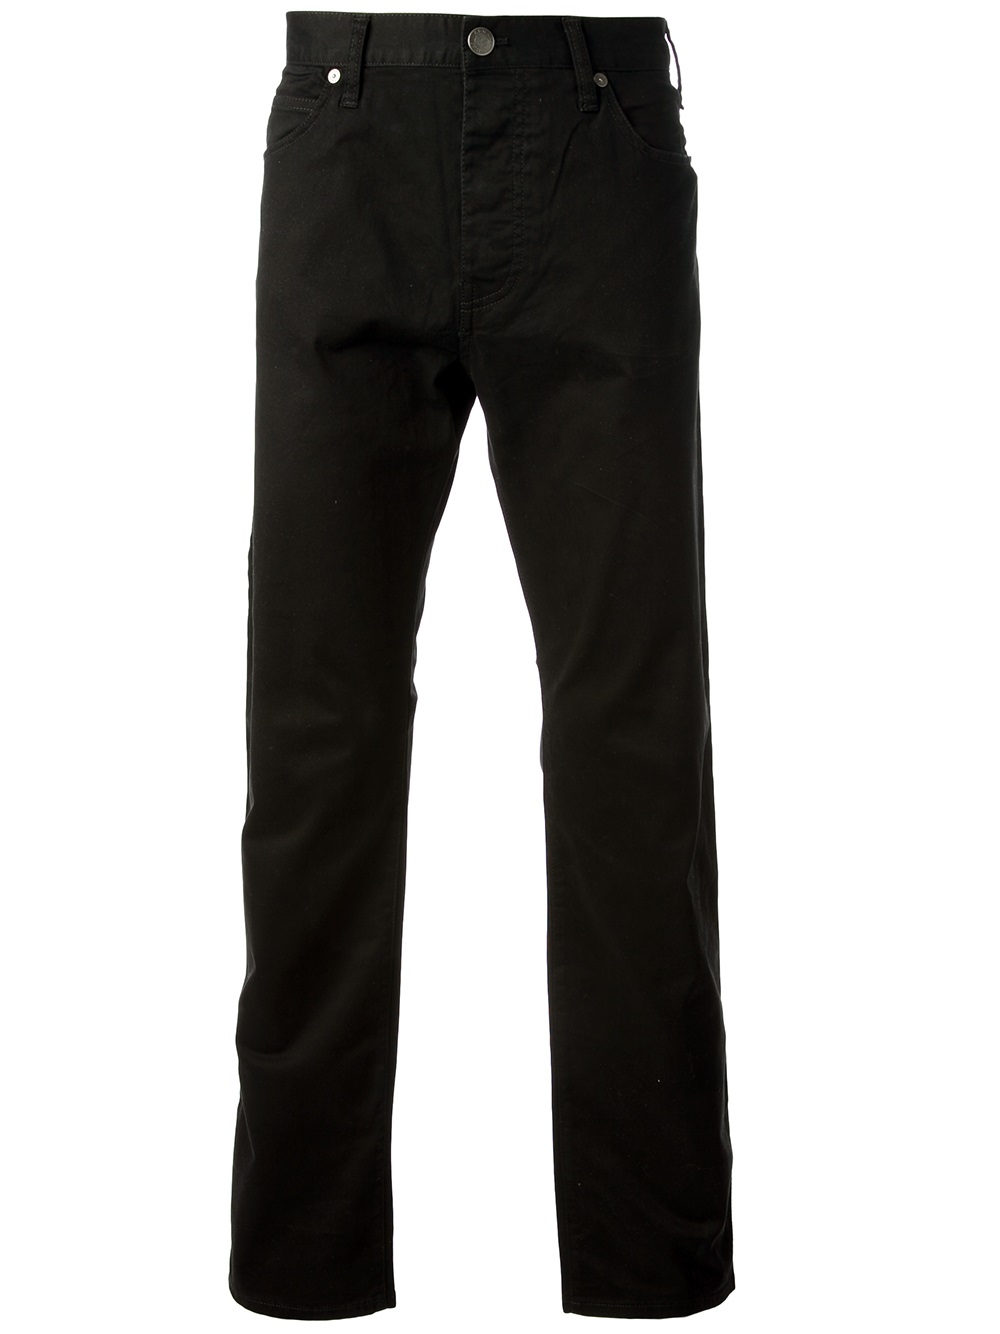 Lyst - Armani Jeans Slim Fit Jeans in Black for Men